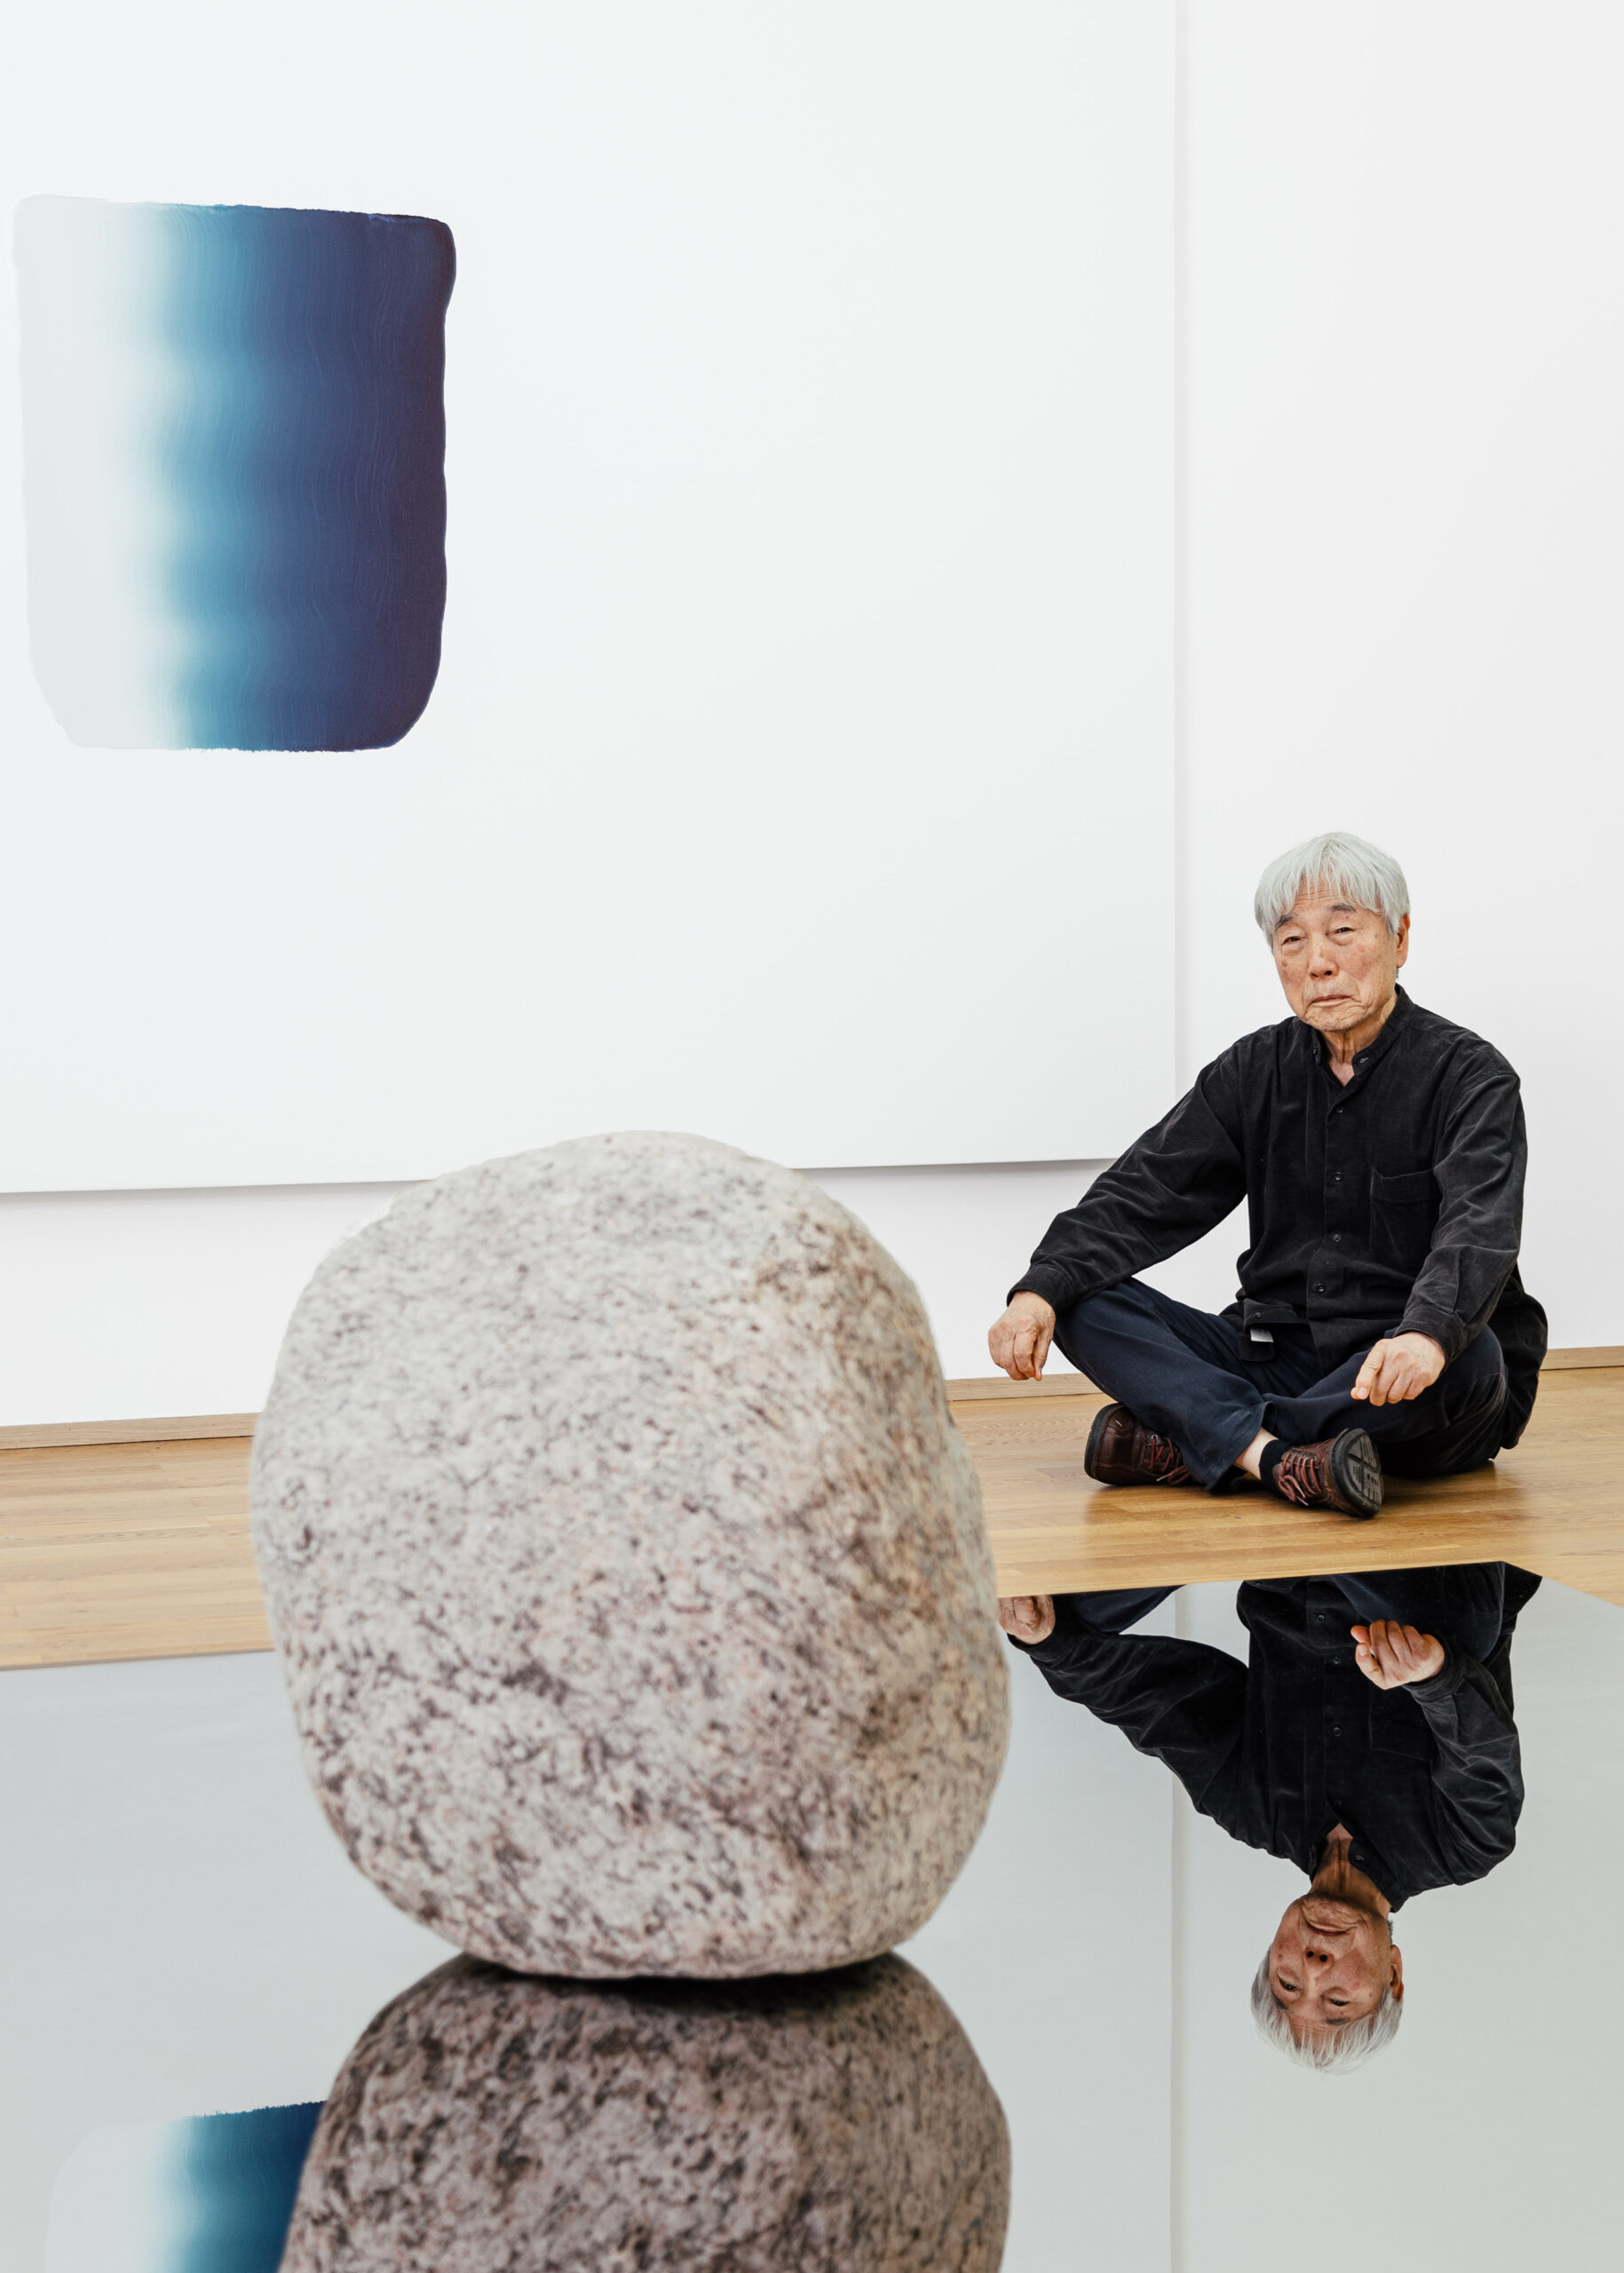 À Berlin, Lee Ufan pose ses pierres